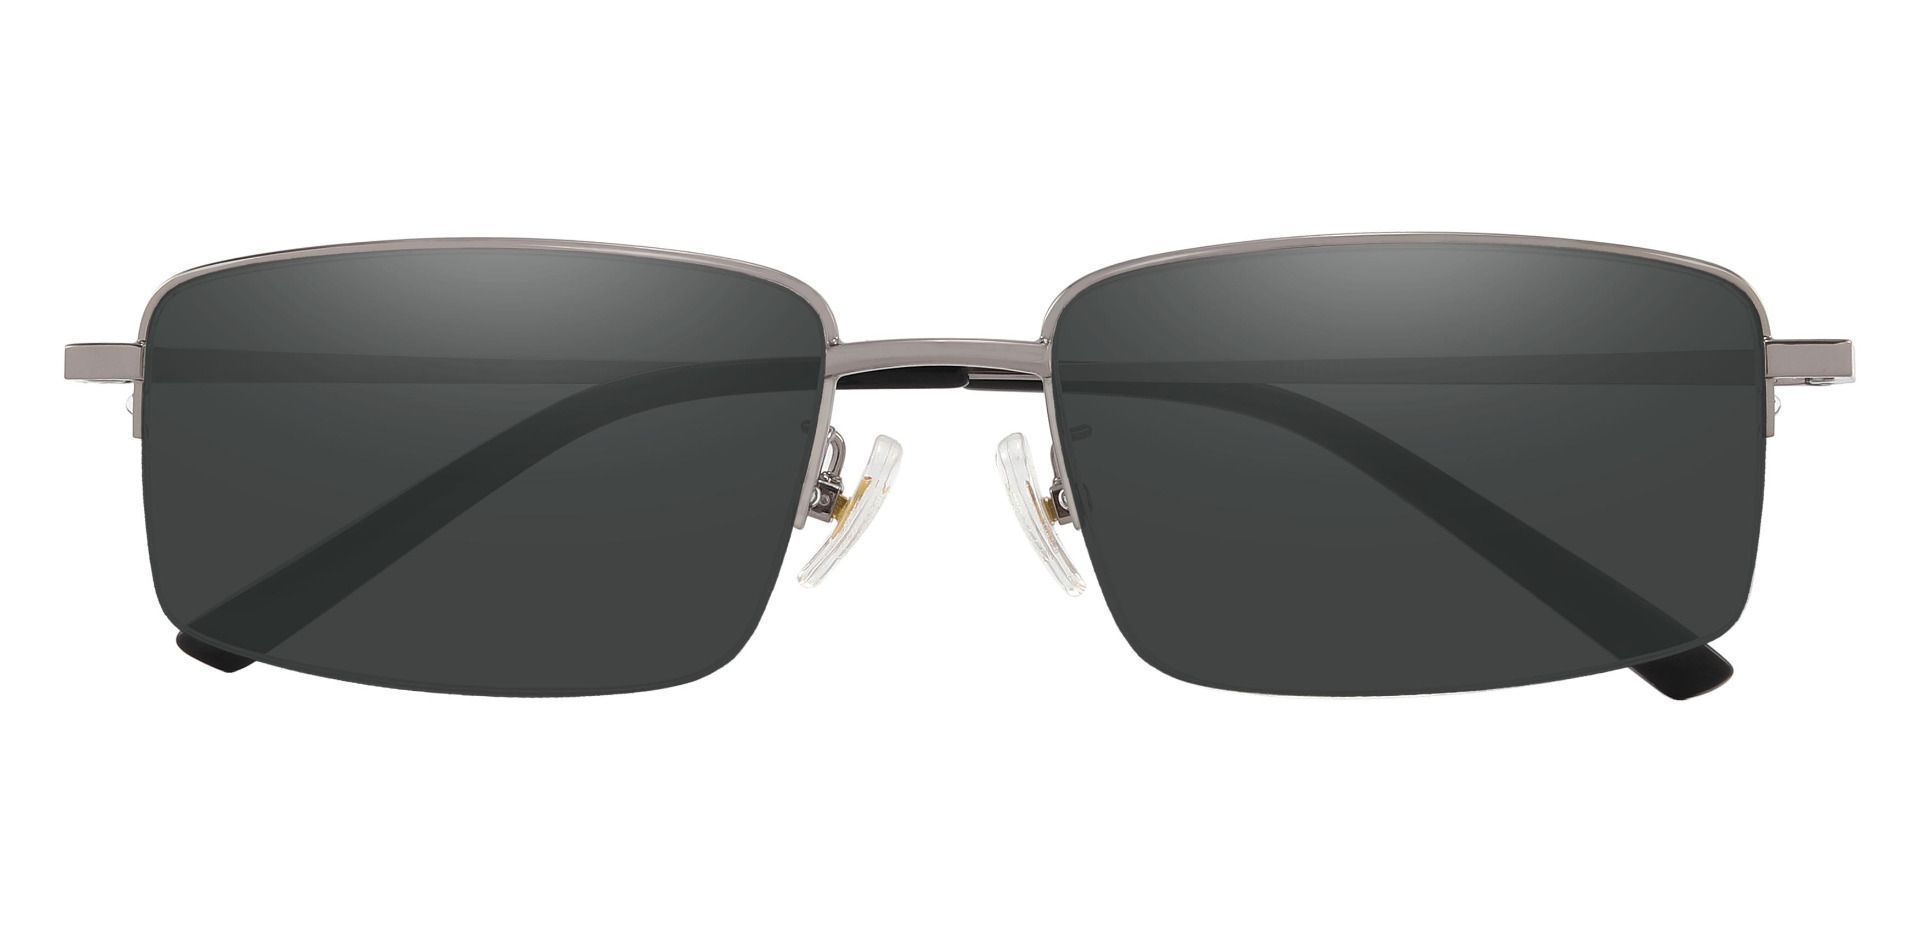 Wayne Rectangle Lined Bifocal Sunglasses - Gray Frame With Gray Lenses